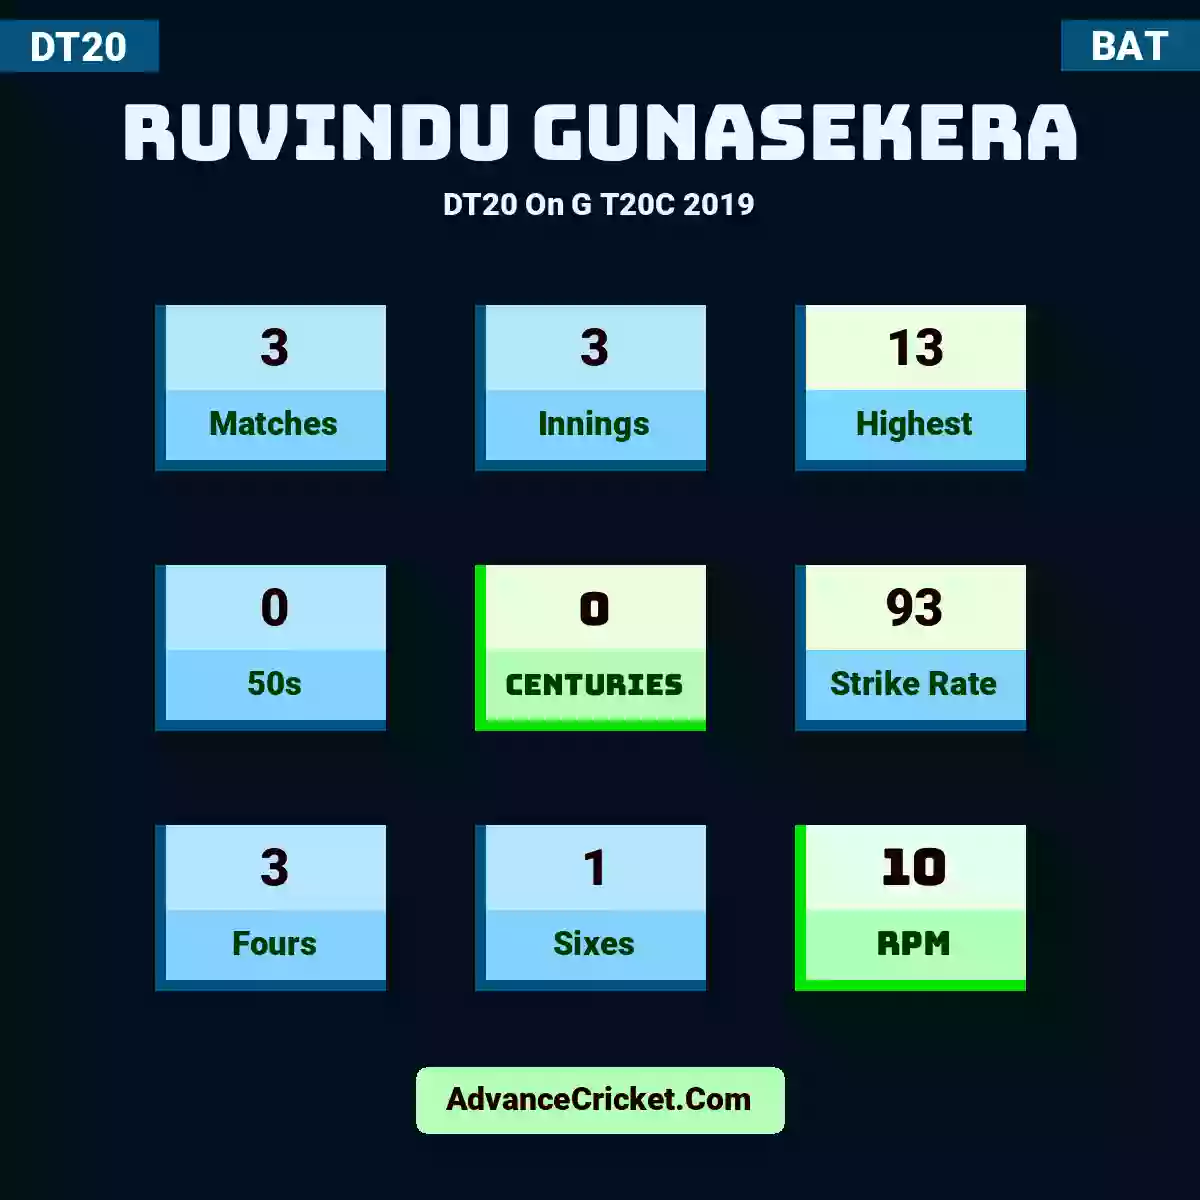 Ruvindu Gunasekera DT20  On G T20C 2019, Ruvindu Gunasekera played 3 matches, scored 13 runs as highest, 0 half-centuries, and 0 centuries, with a strike rate of 93. R.Gunasekera hit 3 fours and 1 sixes, with an RPM of 10.